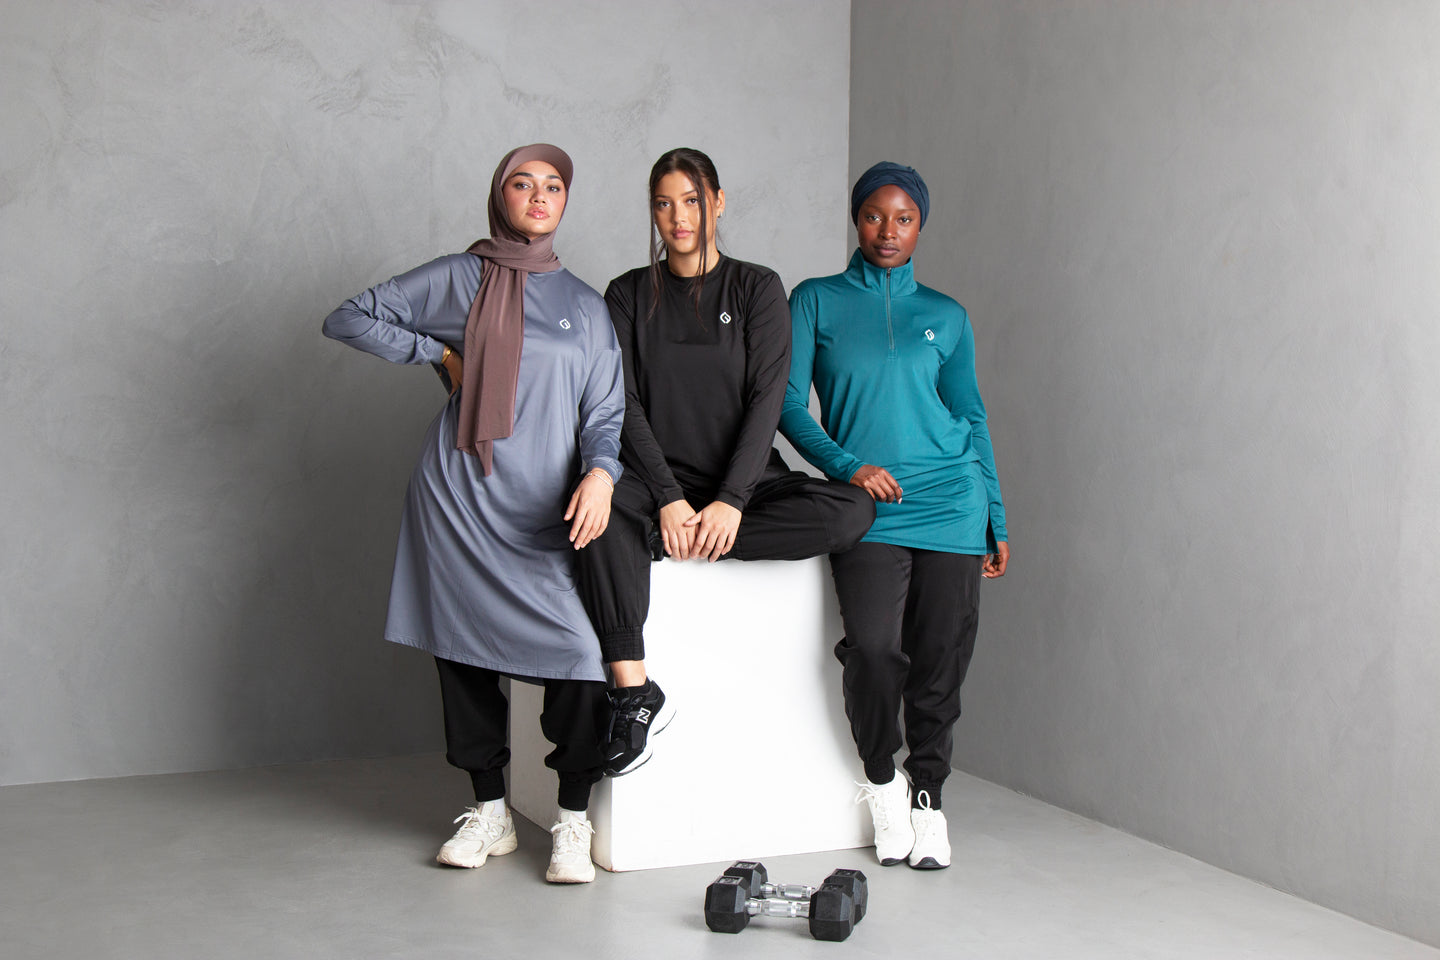 Imaan Active - Modest Activewear/Modest Athleisure/Modest Sportswear